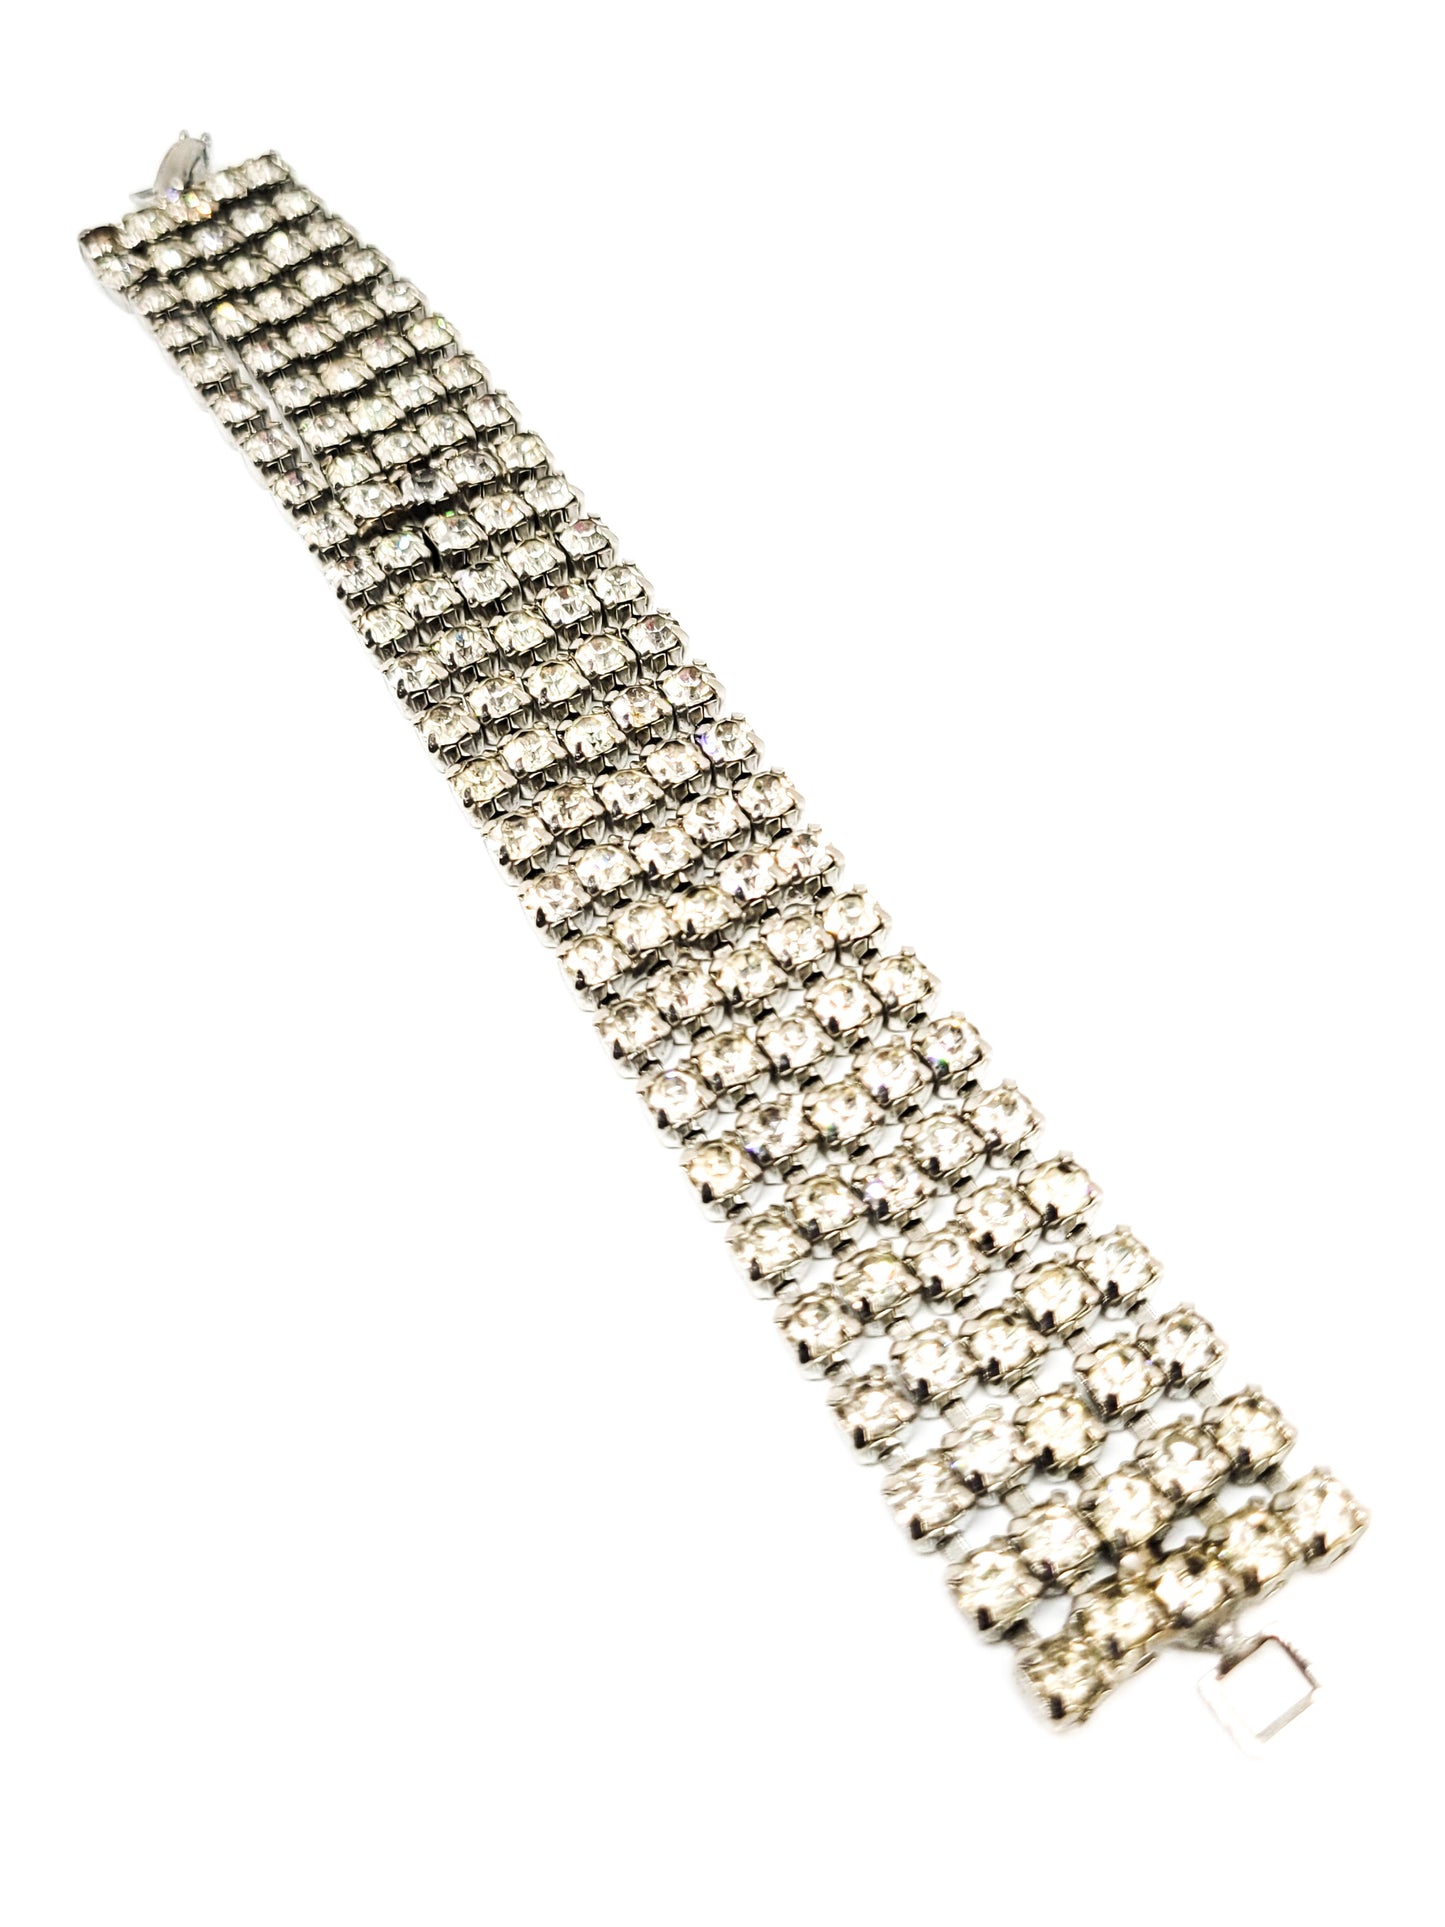 Large 4 row clear rhinestone vintage tennis cuff bracelet